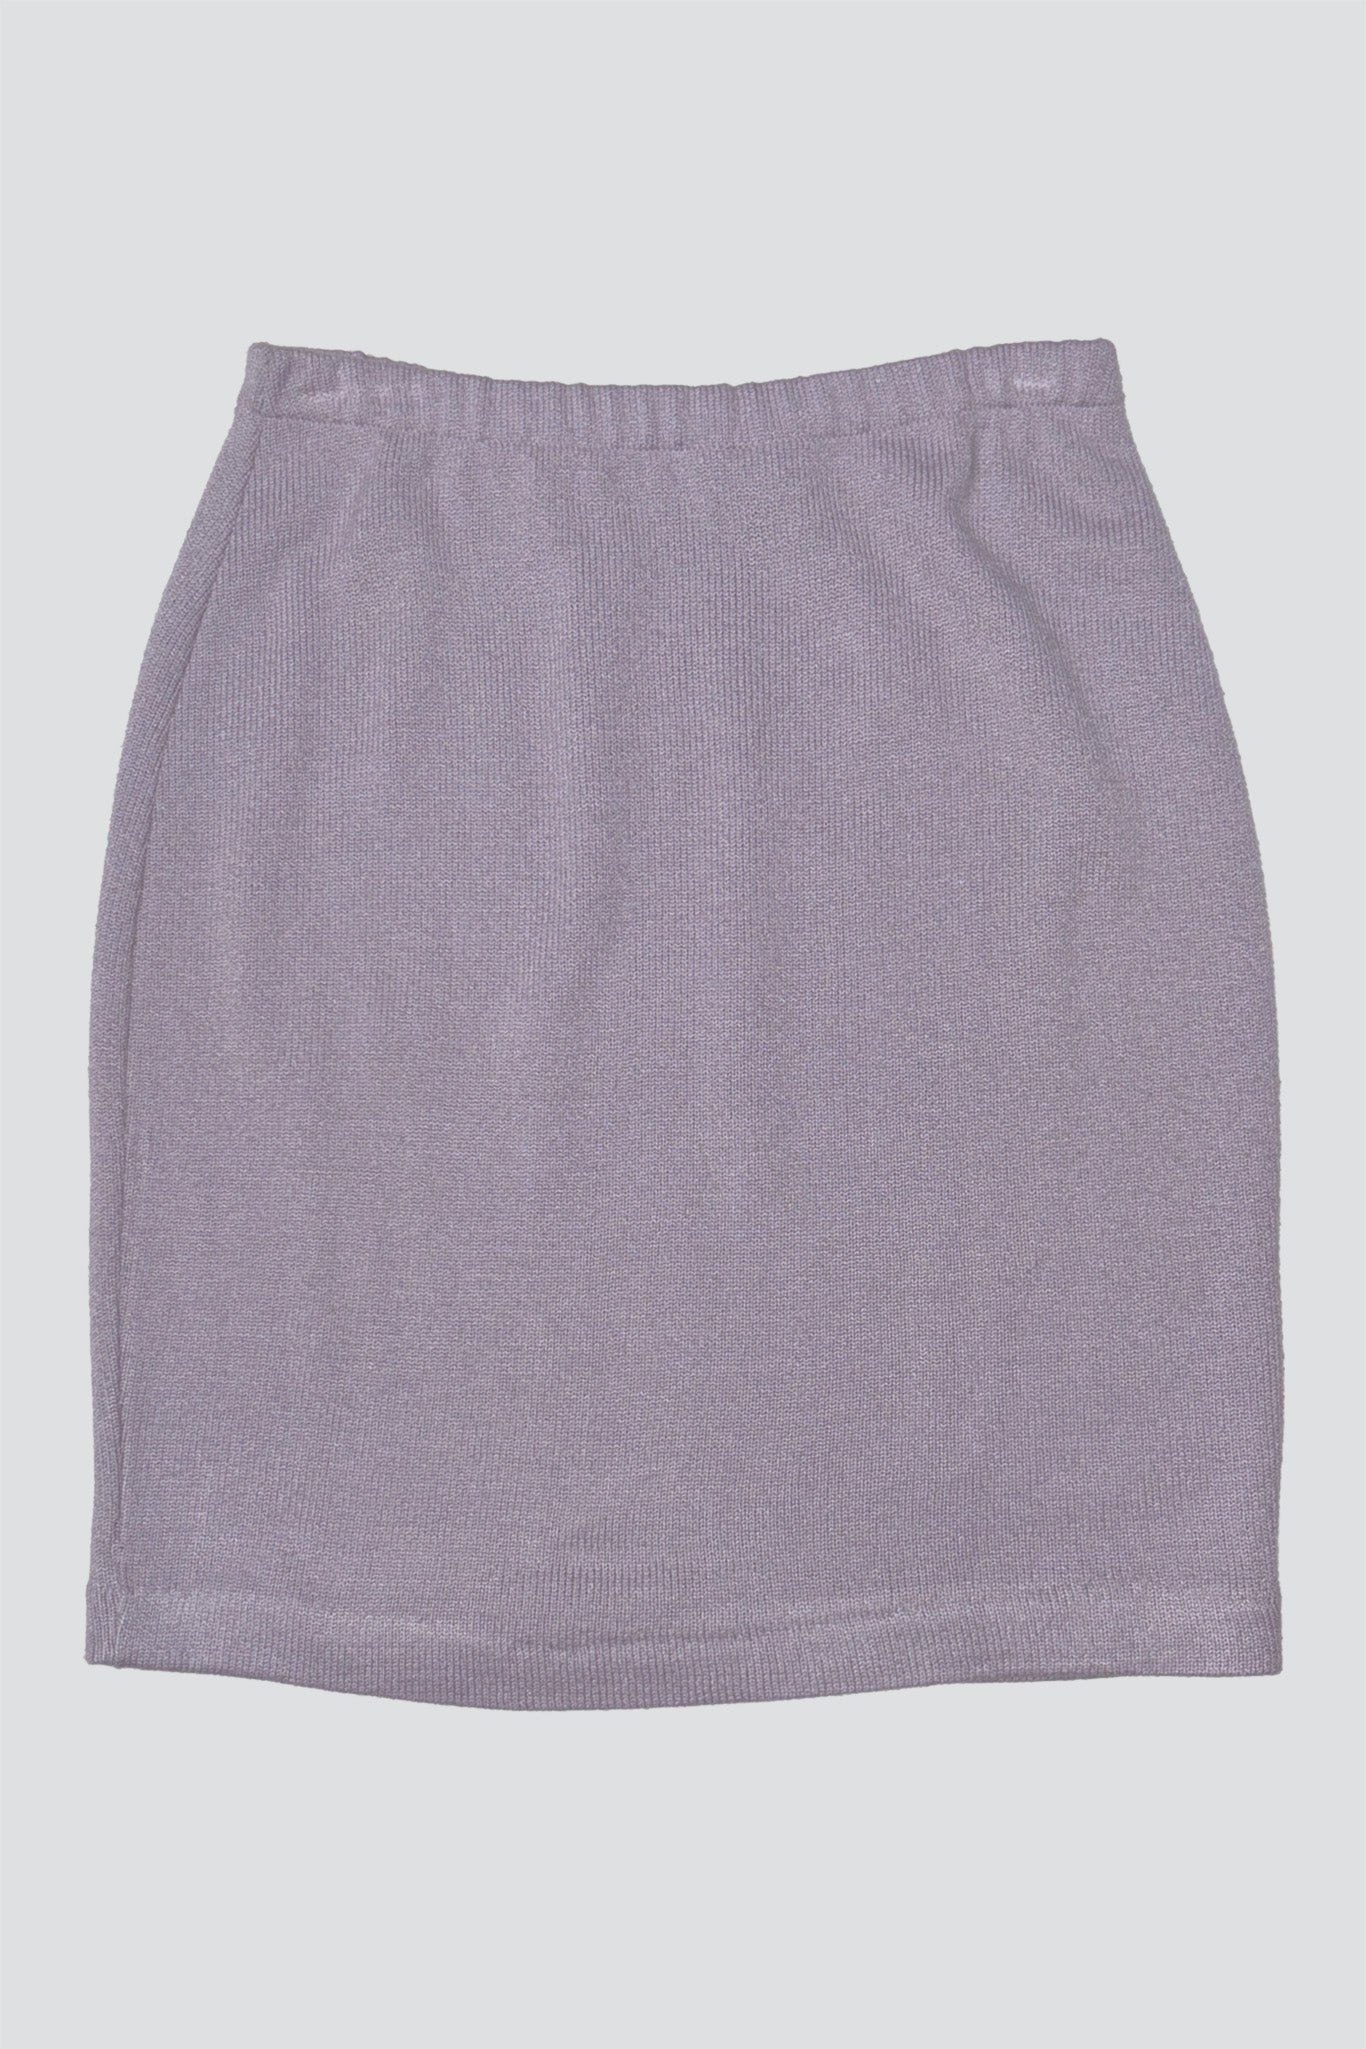 Lilac Knit Skirt